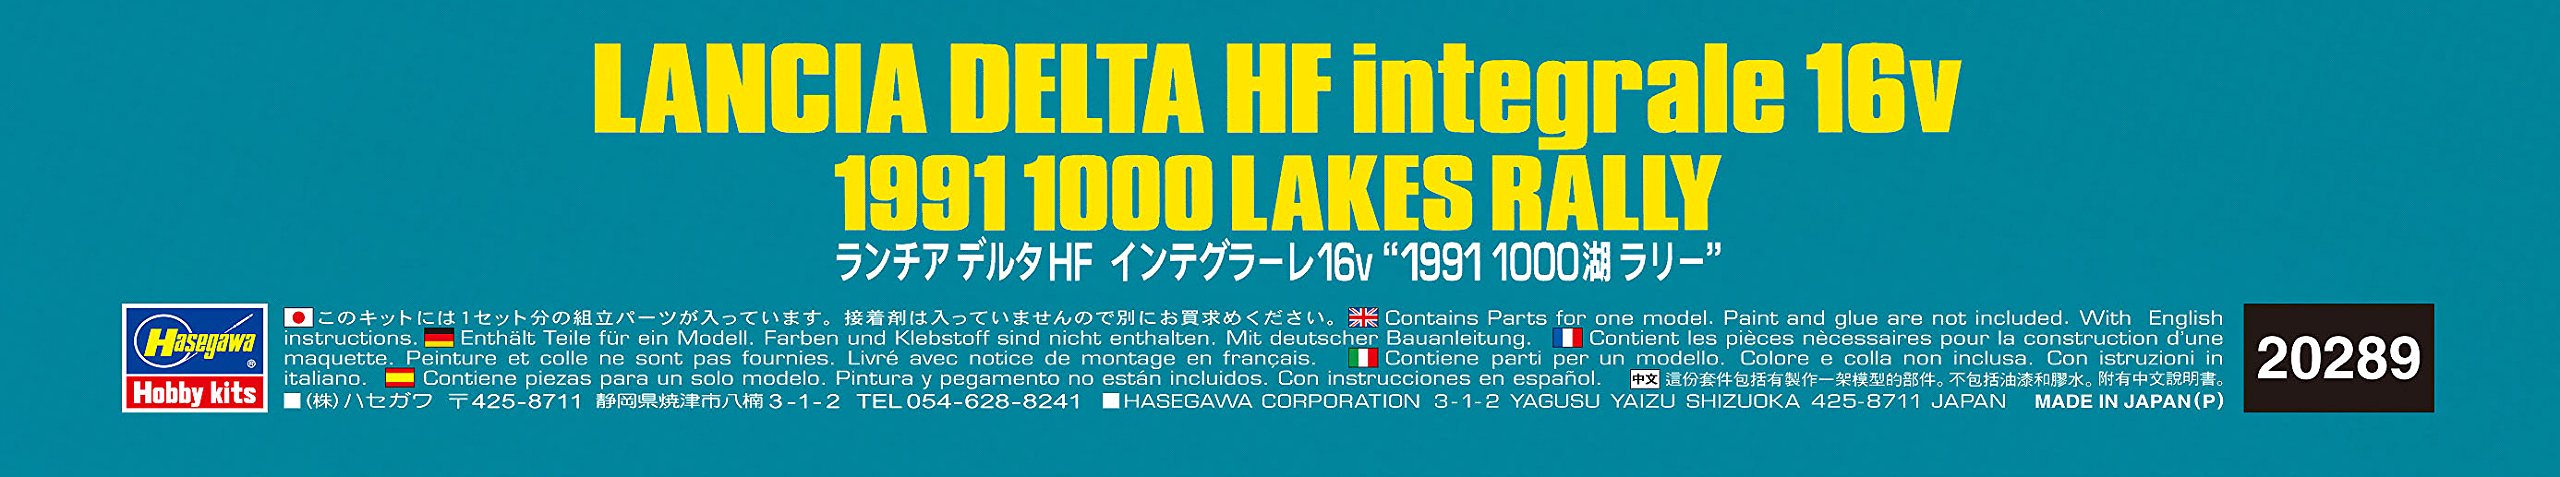 HASEGAWA 20289 Lancia Delta Hf Integrale 16V 1991 1000 Lakes Rally Bausatz im Maßstab 1:24